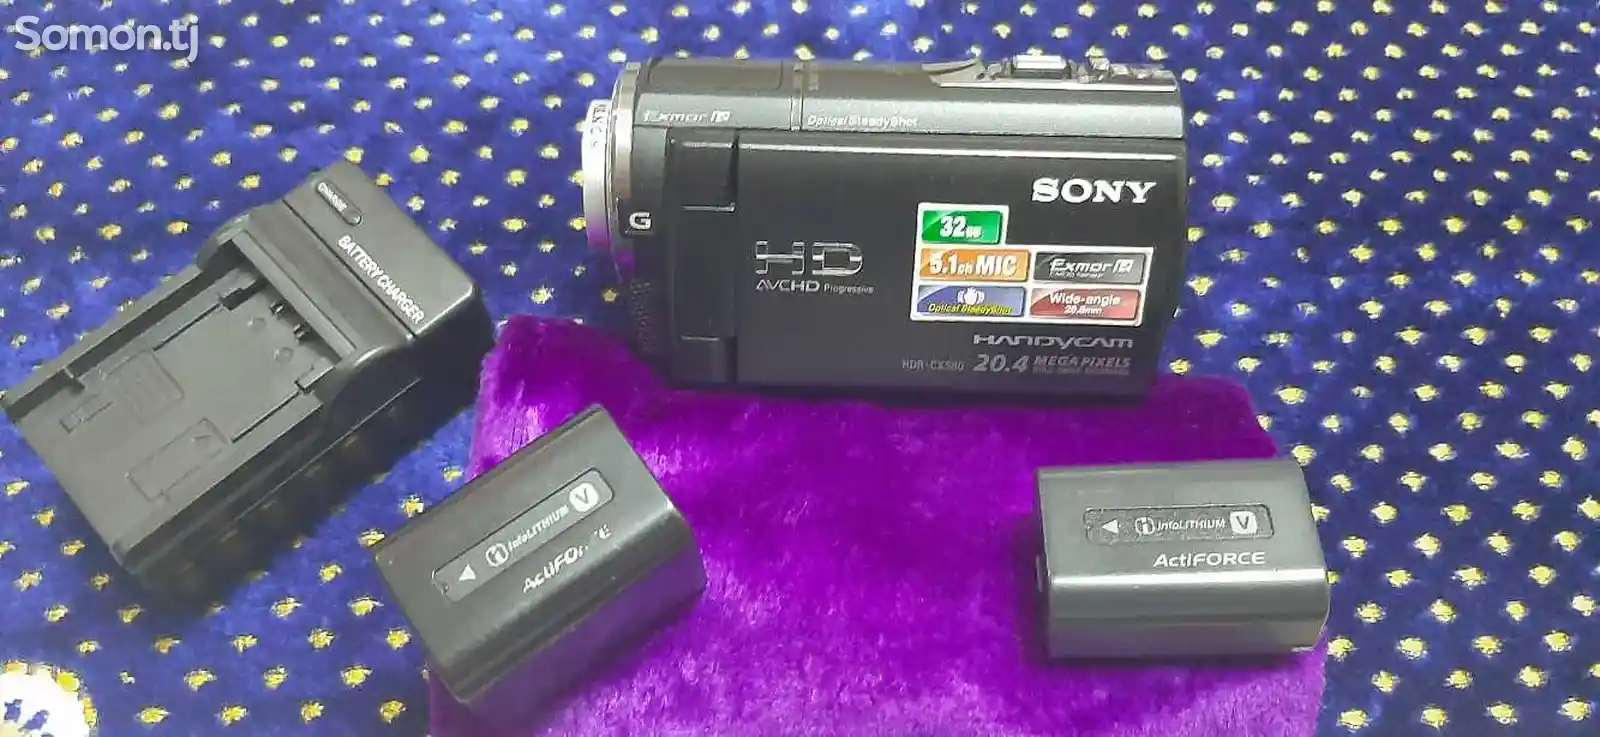 Видеокамера Sony hdr-cx580-3